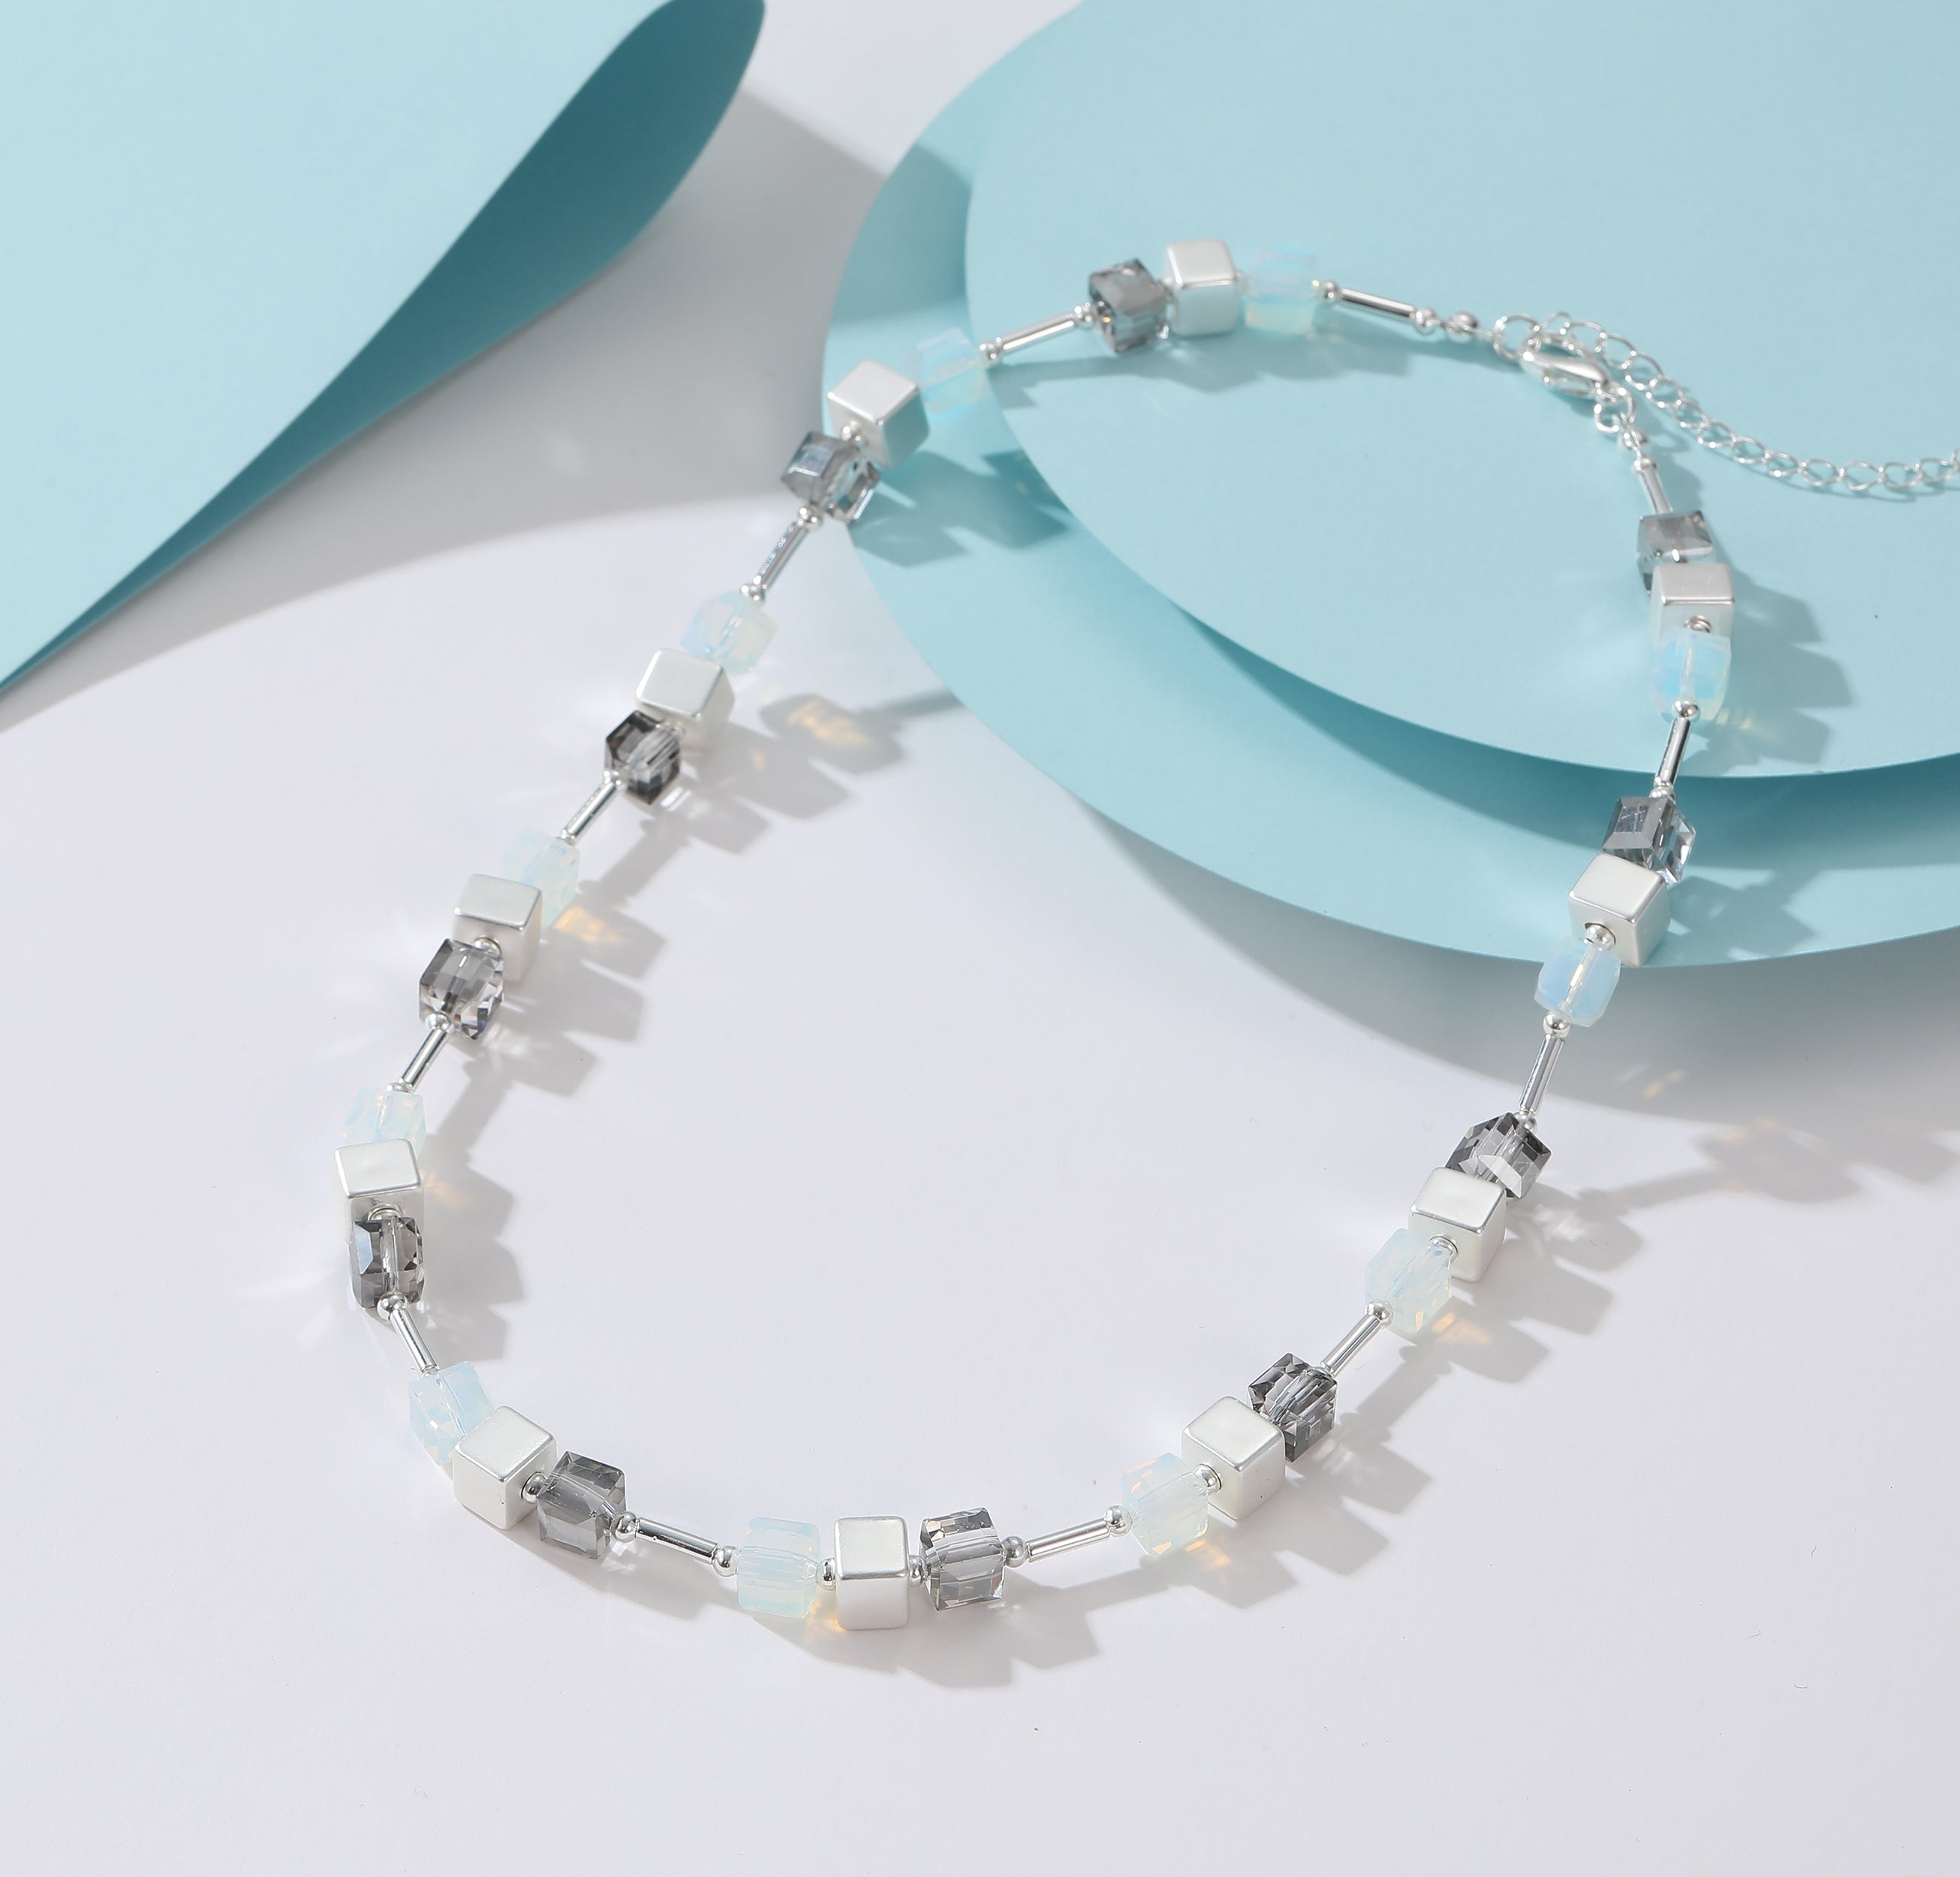 Light Cube Necklace - The Nancy Smillie Shop - Art, Jewellery & Designer Gifts Glasgow